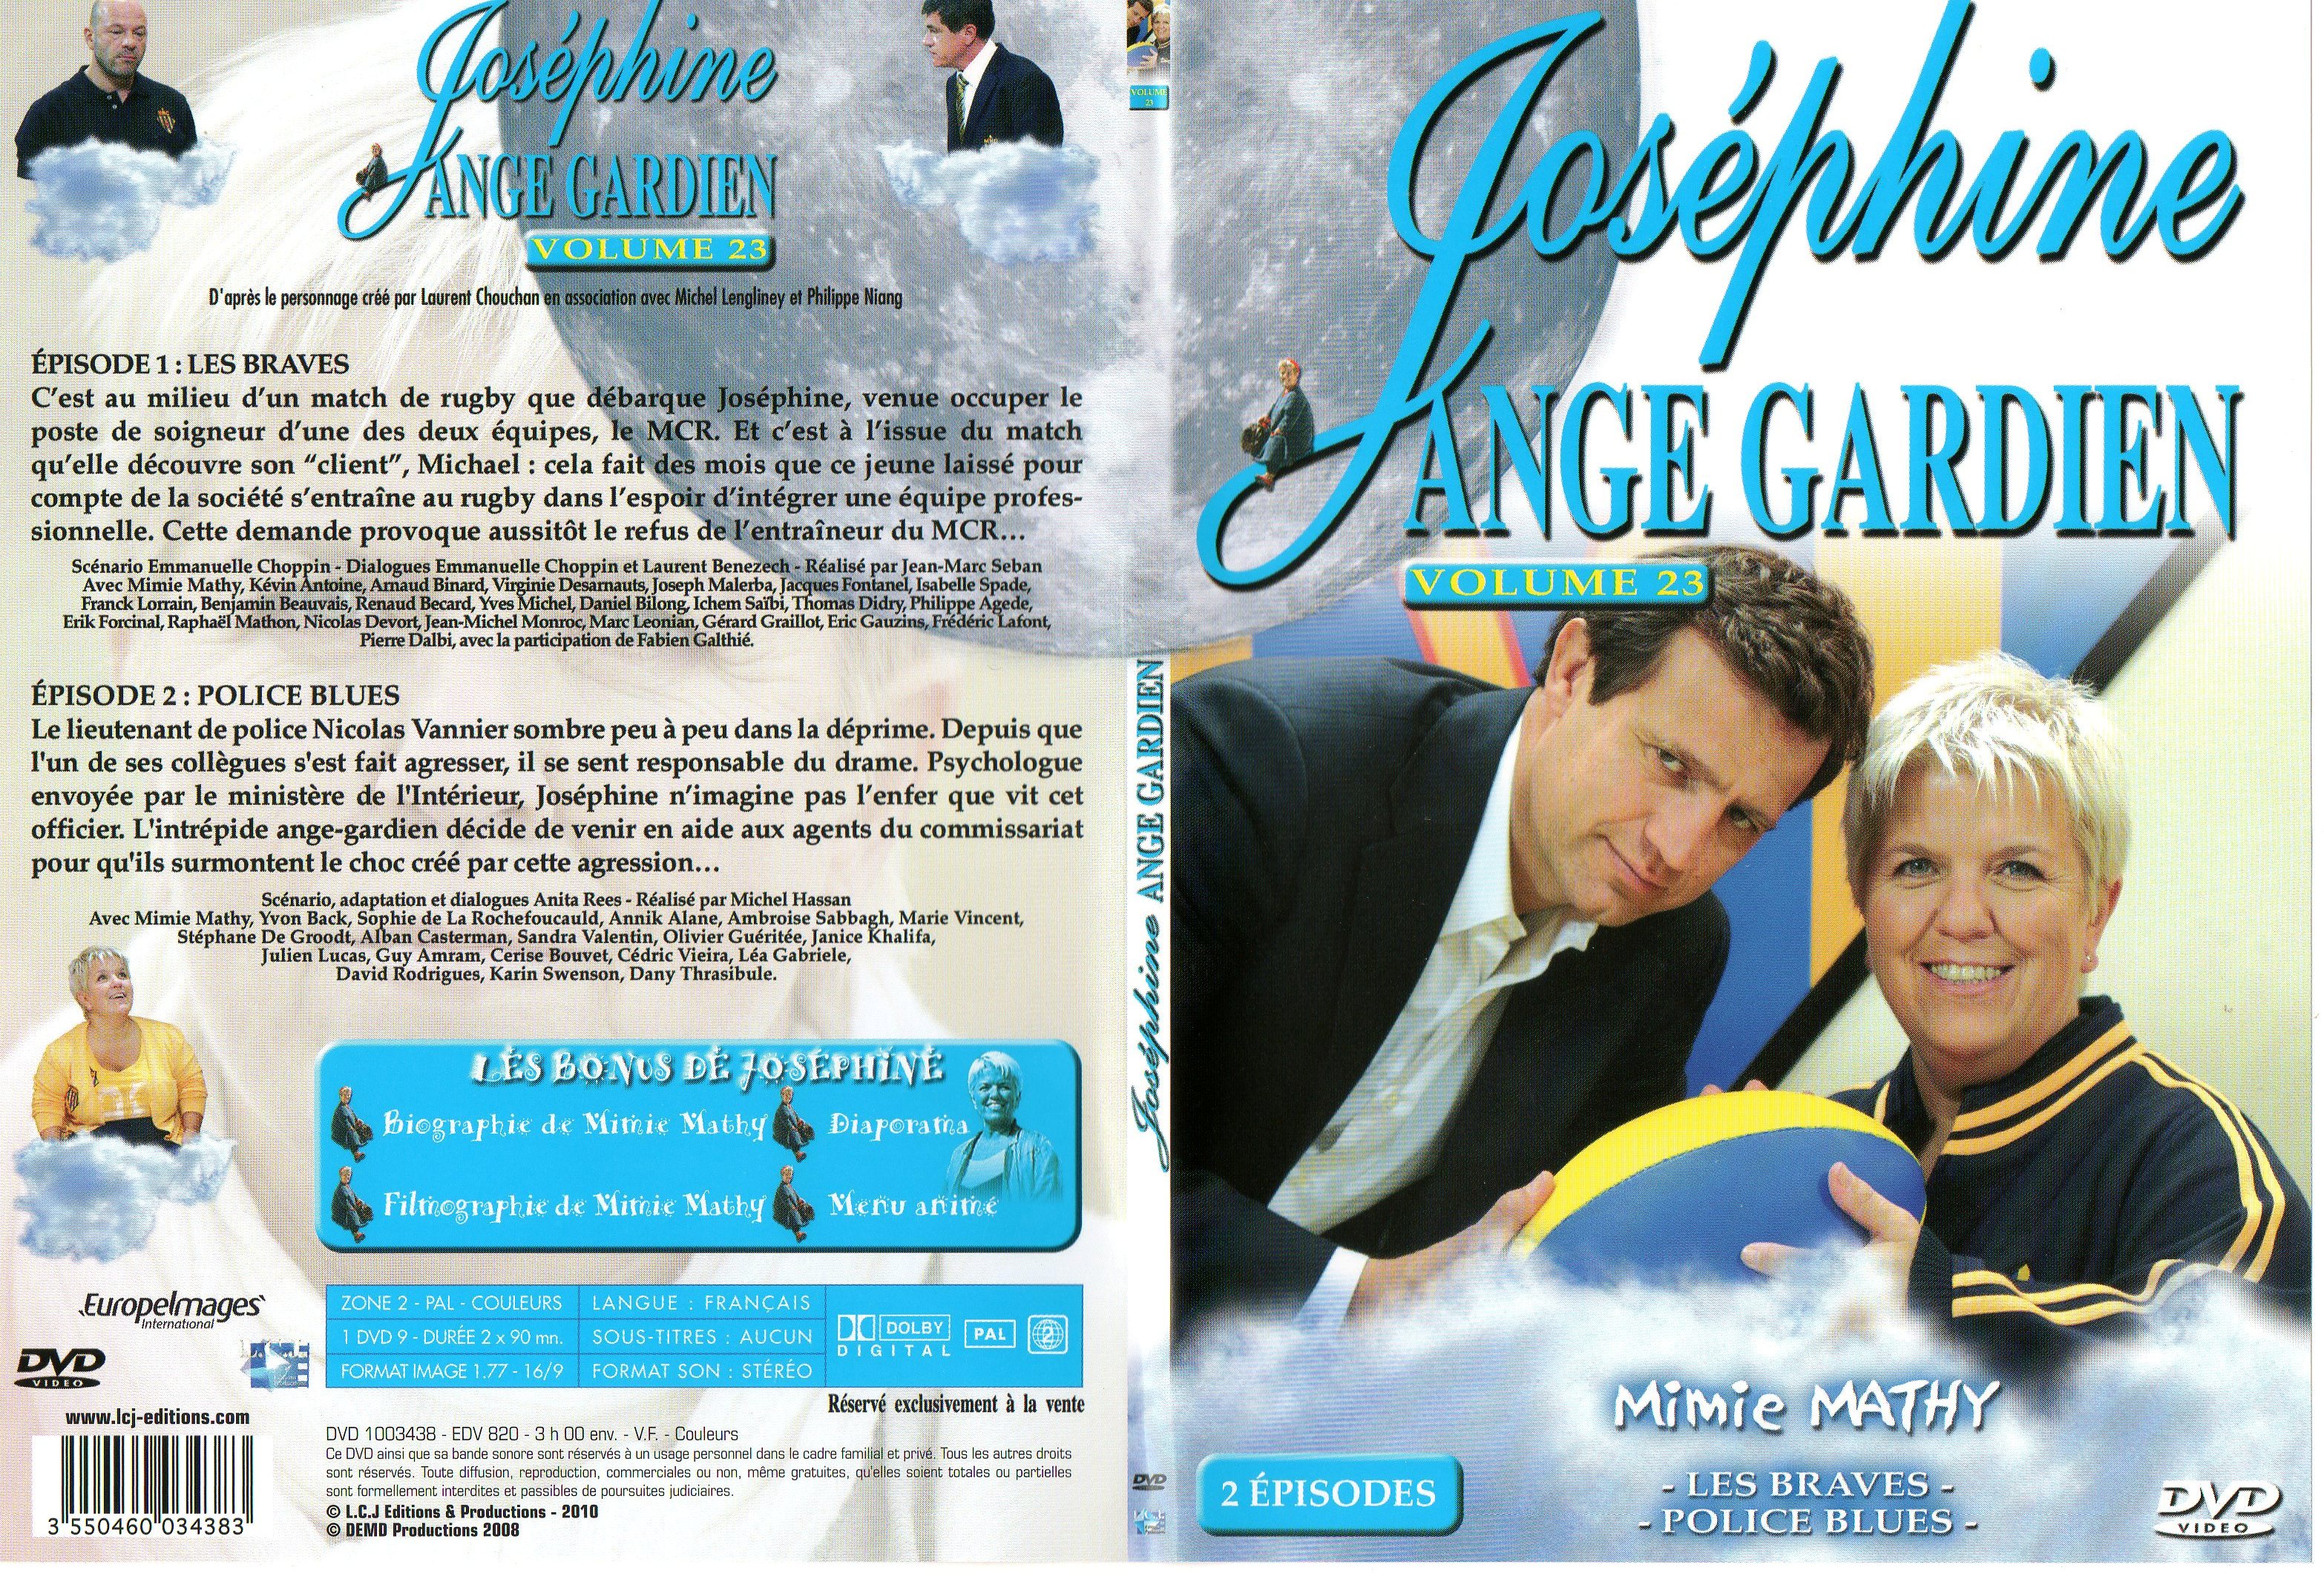 Jaquette DVD Josphine Ange Gardien saison 5 DVD 23